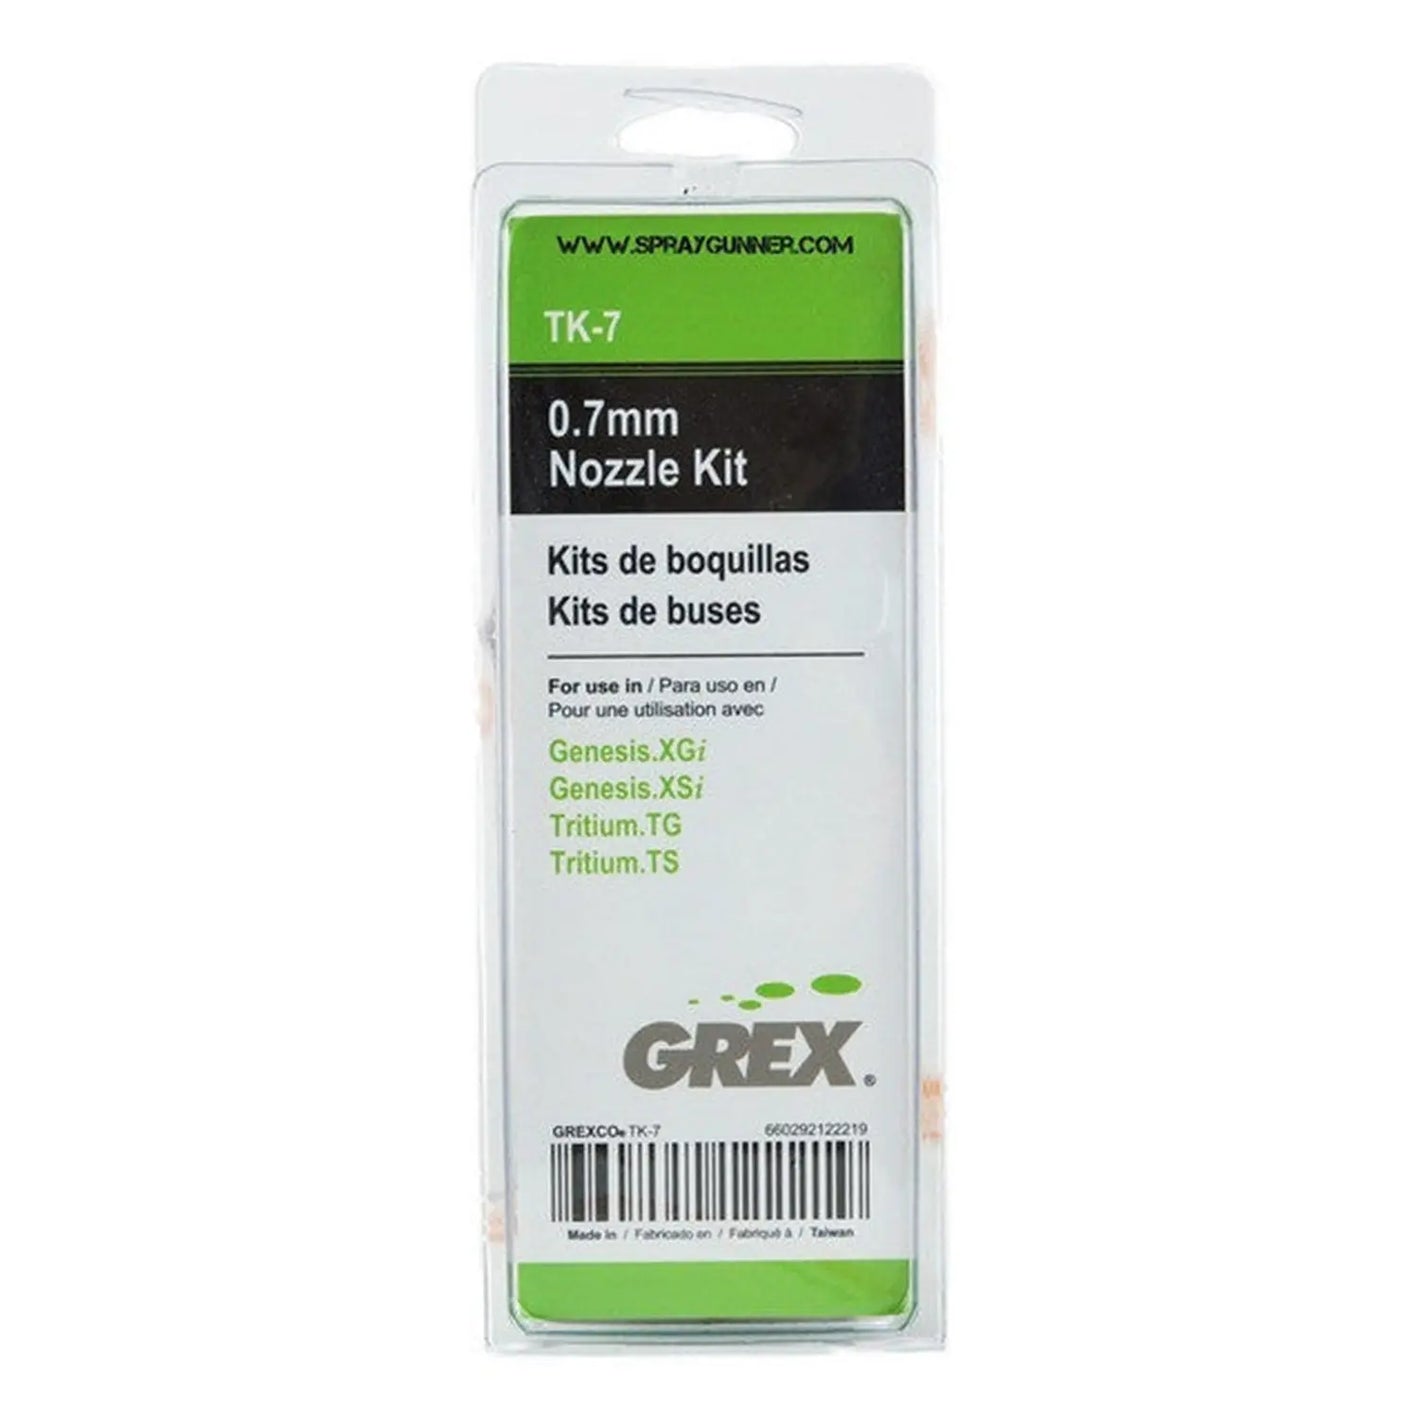 Grex 0.7mm Nozzle Kit (TK-7) Grex Airbrush